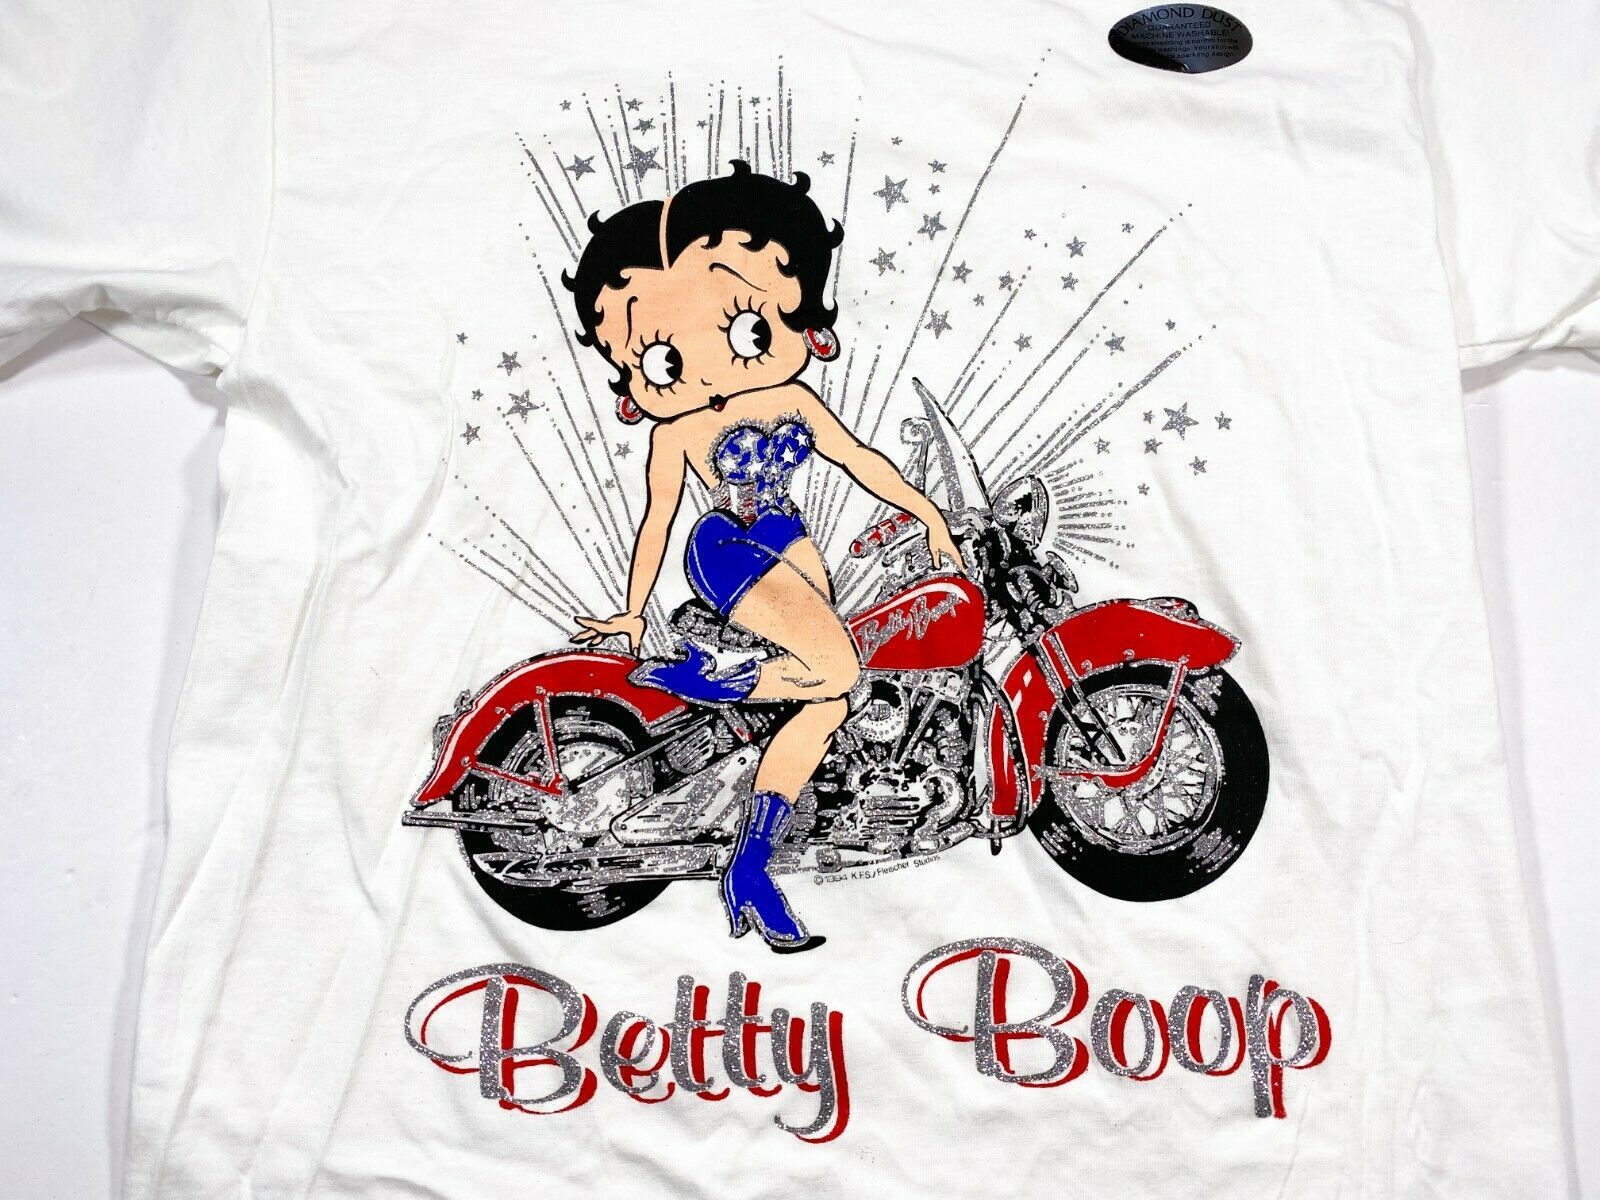 betty boop motorcycle wallpaper